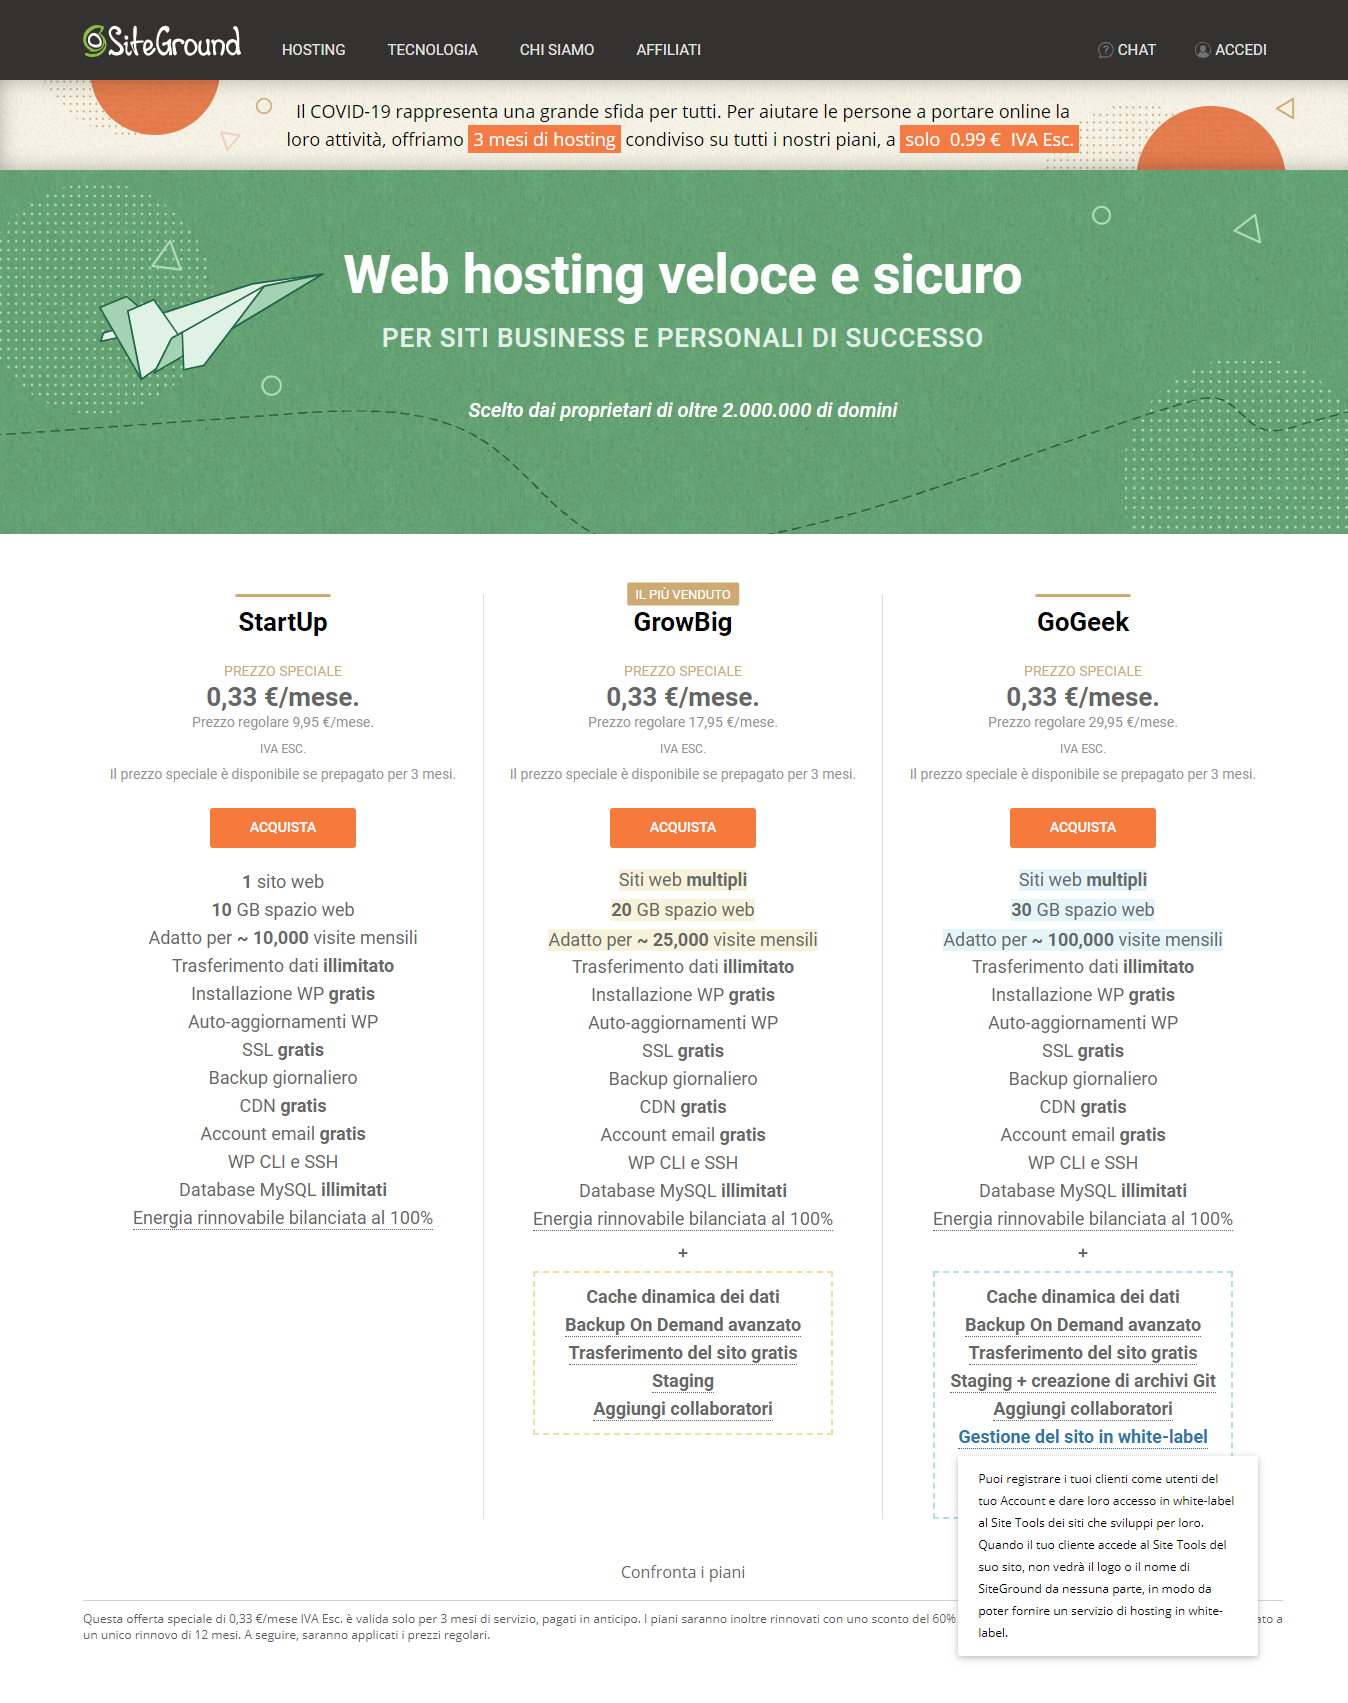 siteground-hosting-prezzi